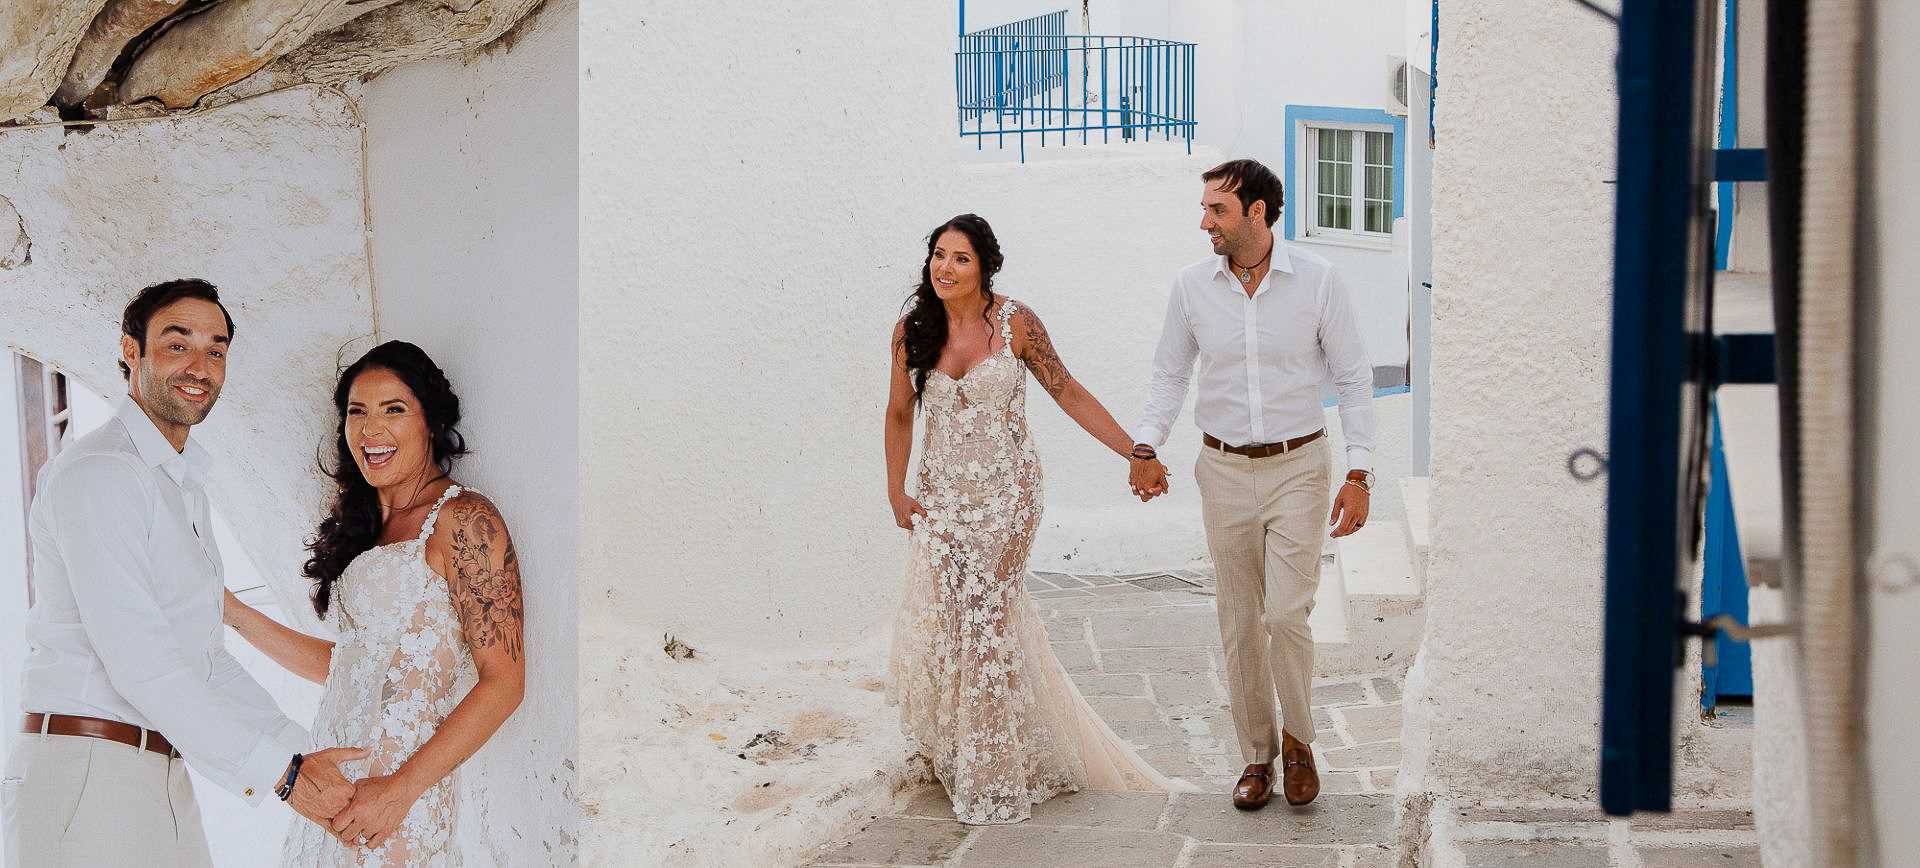 santorini honeymoon photoshoot greece